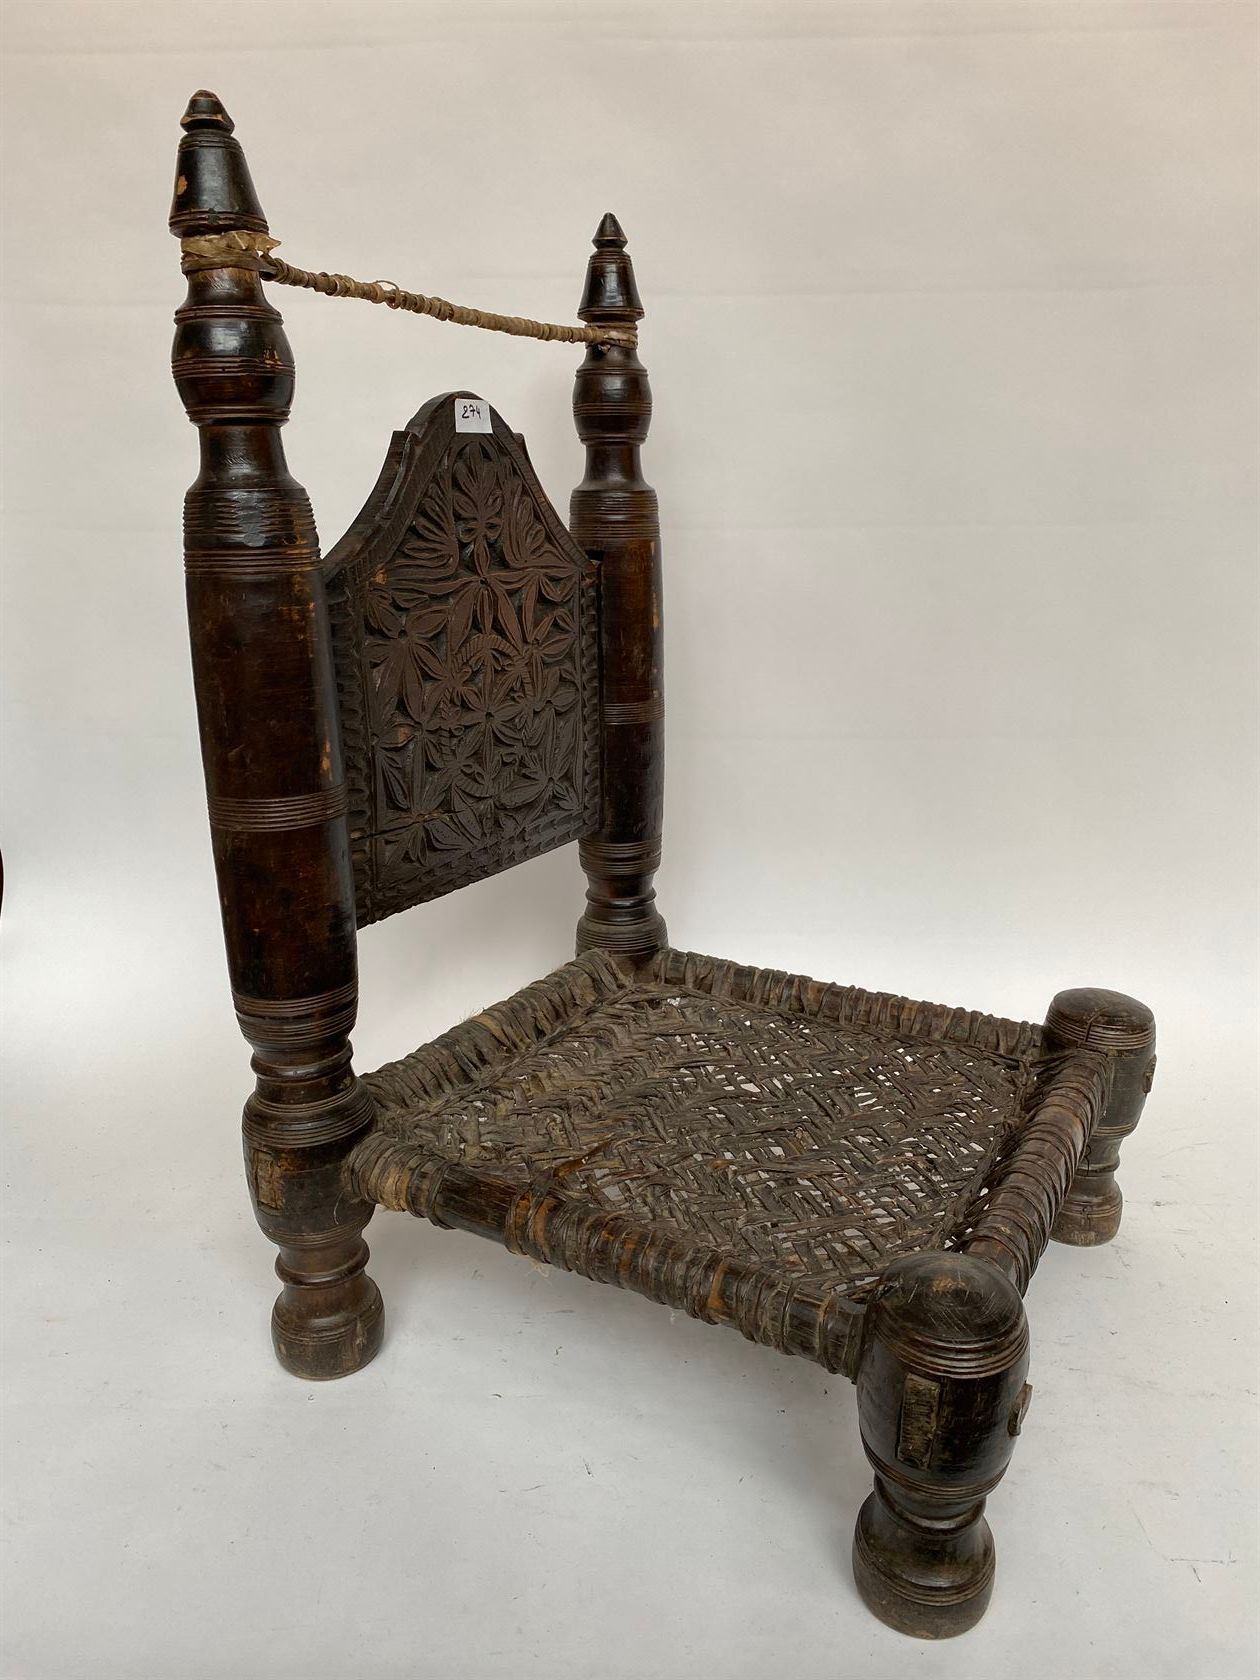 Null 两把低矮的椅子放在四条翻转的木腿上，栏杆式的立柱，椅背上雕刻着花和叶子，座椅用皮革编织而成。阿富汗。靠背高度为82和76厘米。